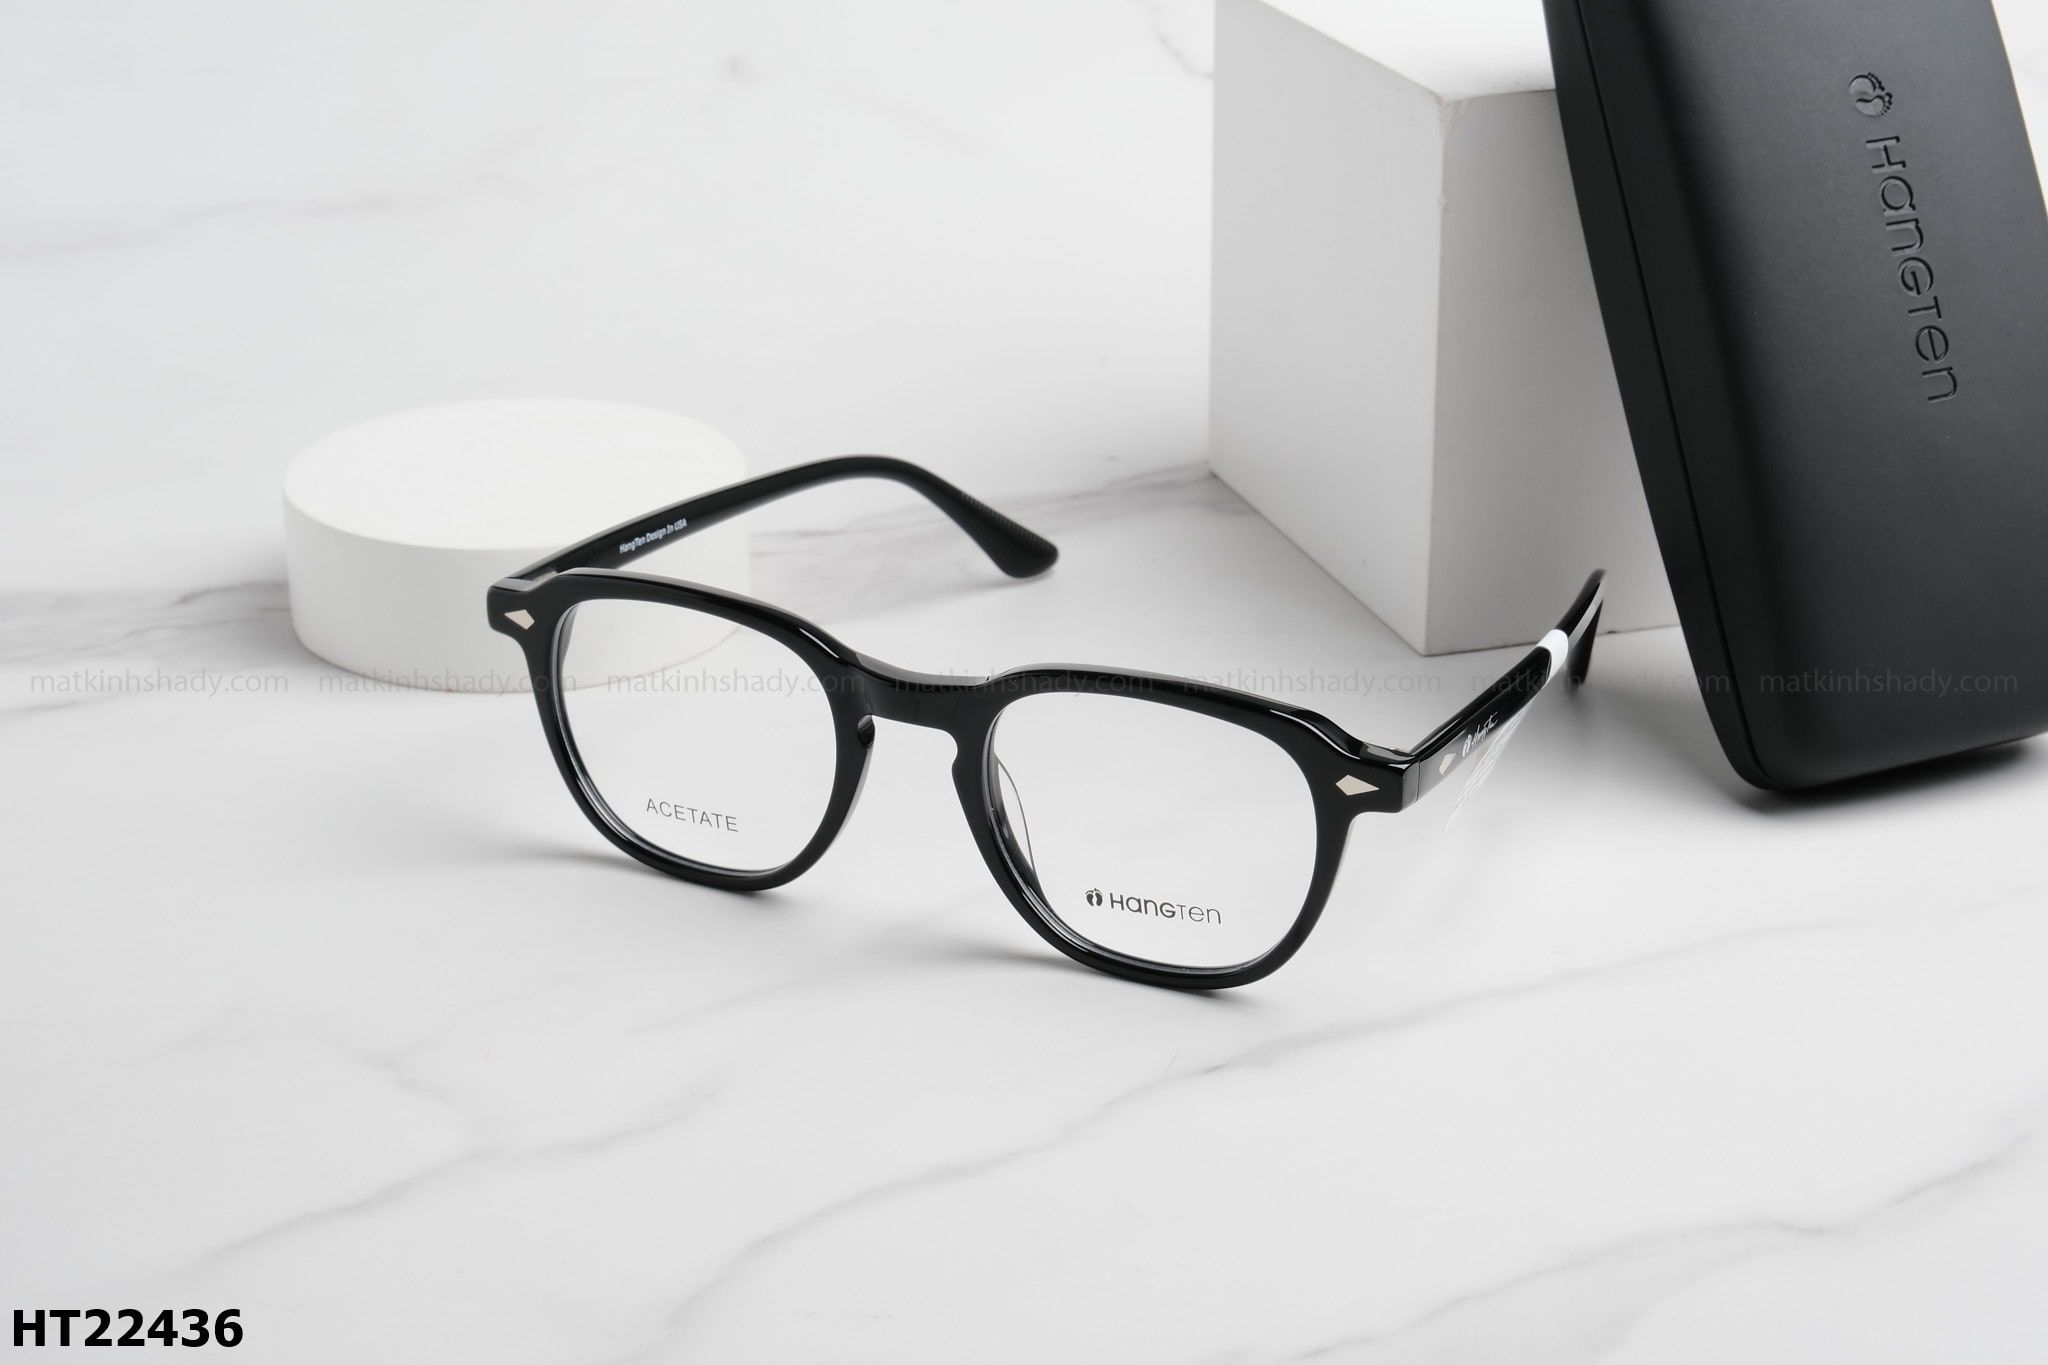  Hangten Eyewear - Glasses - HT22436 